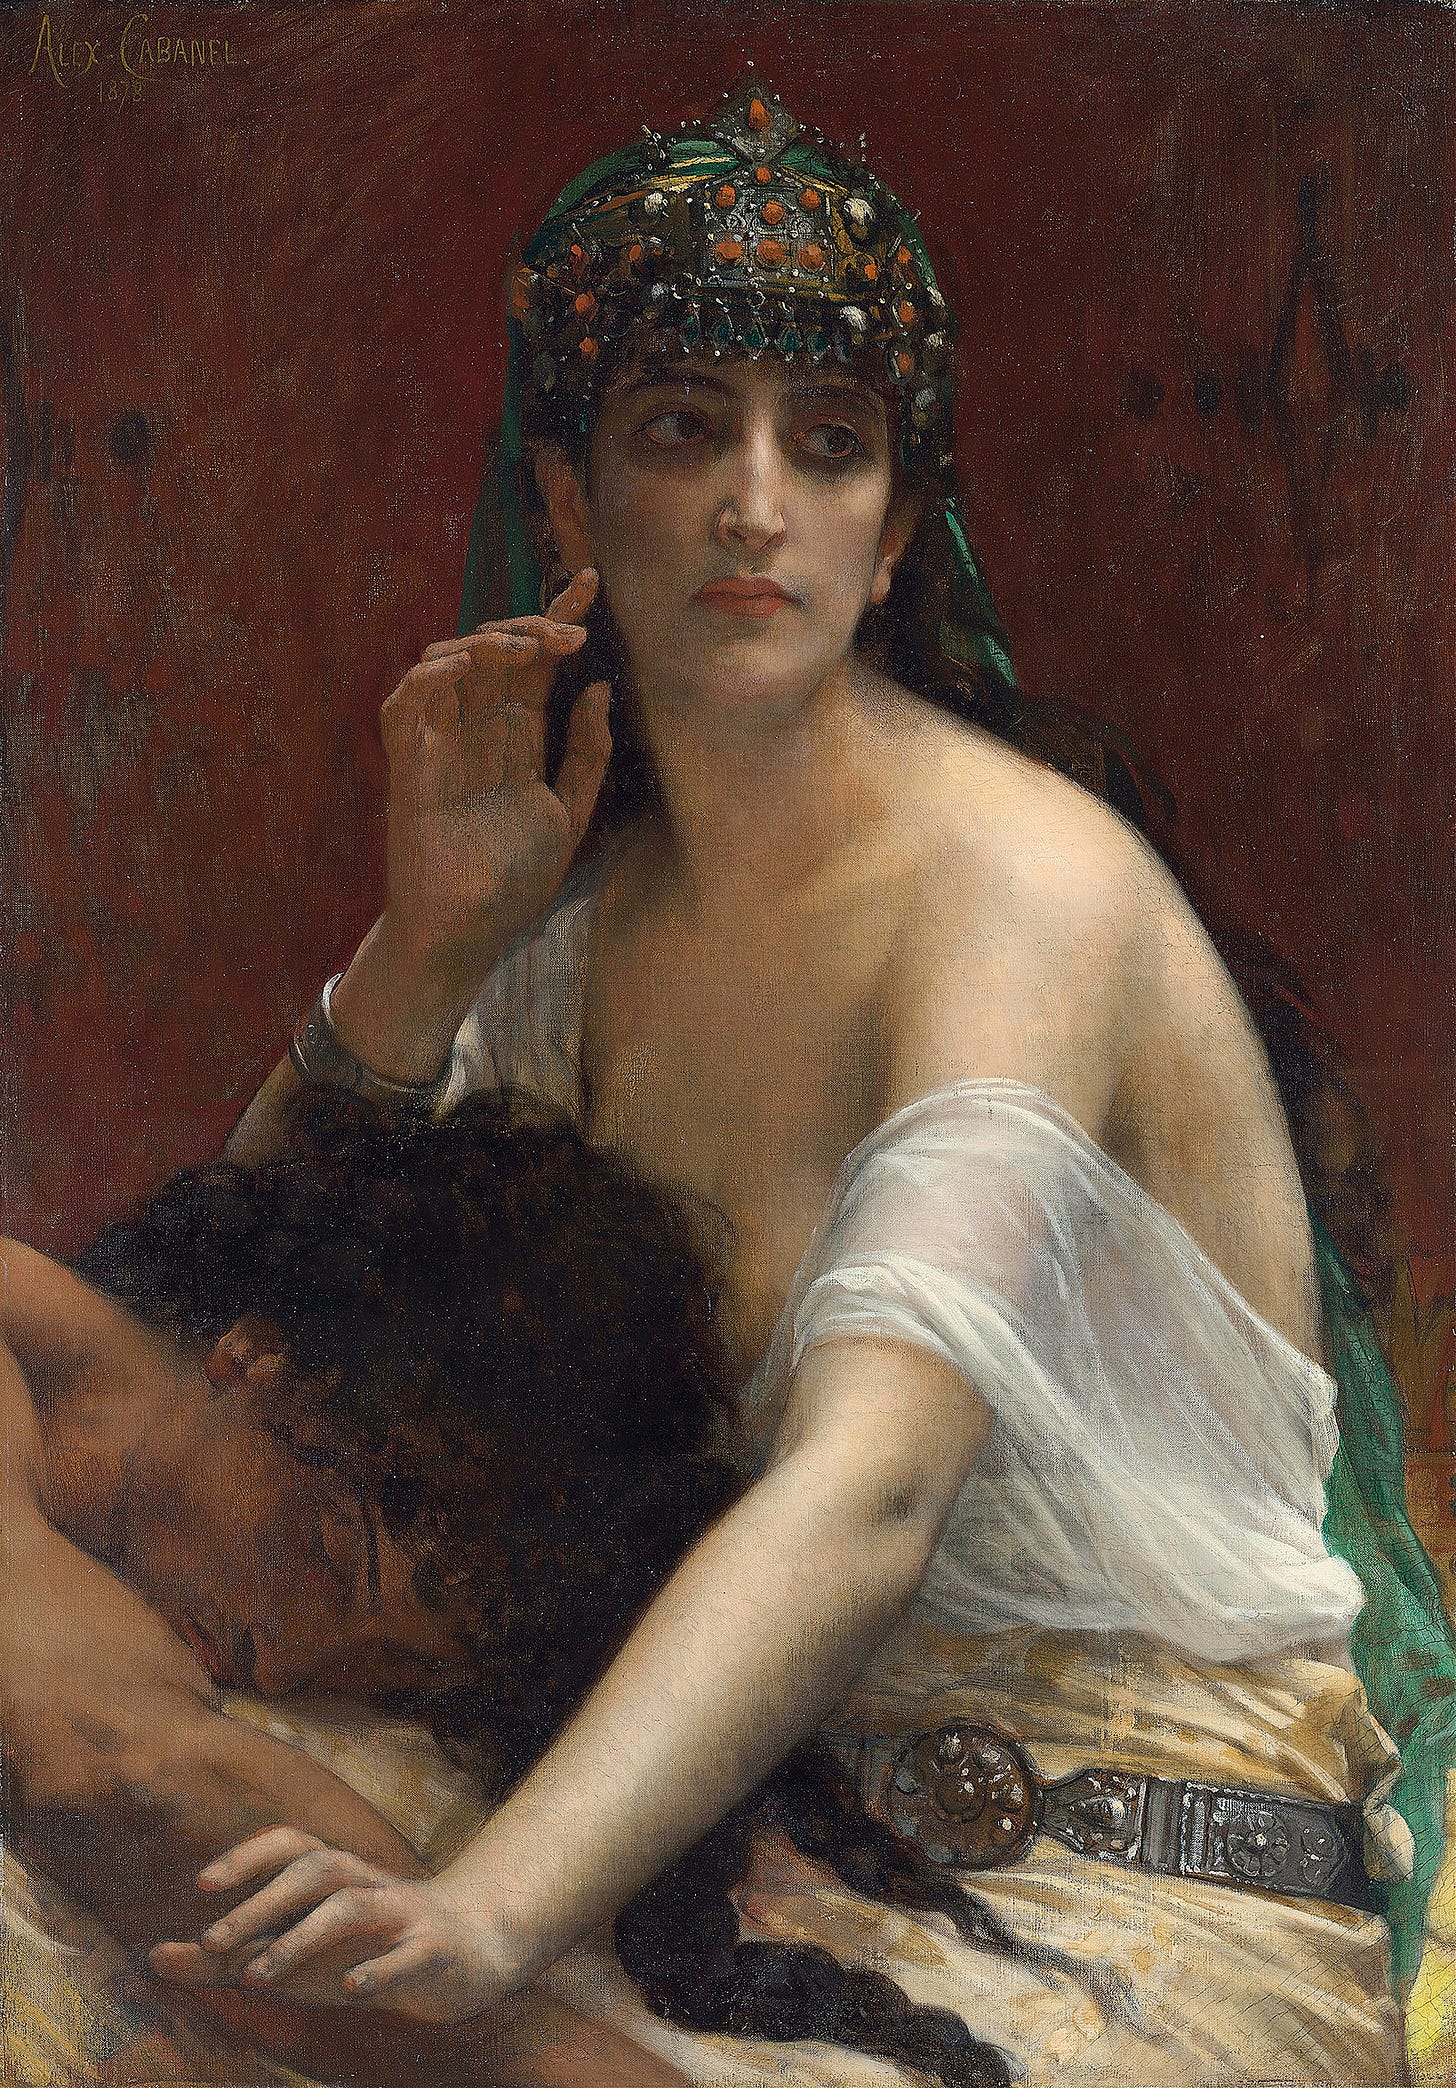 Samson And Delilah (1878) by Alexandre Cabanel